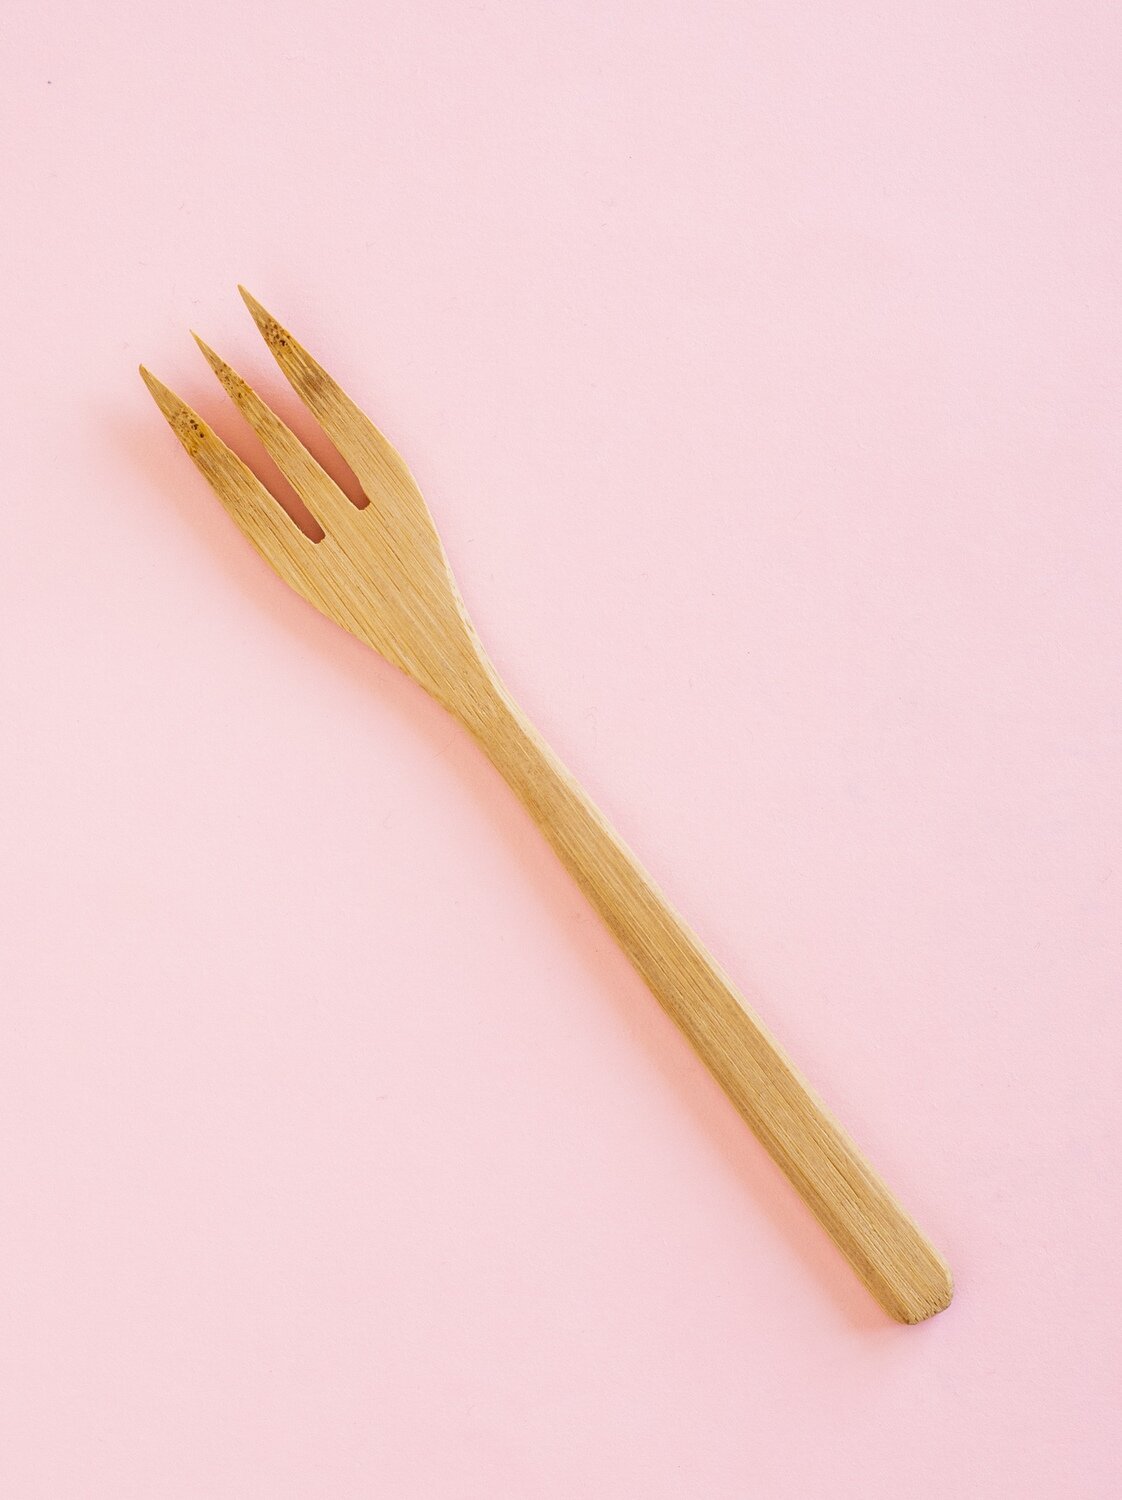 Tenedor de madera reusable